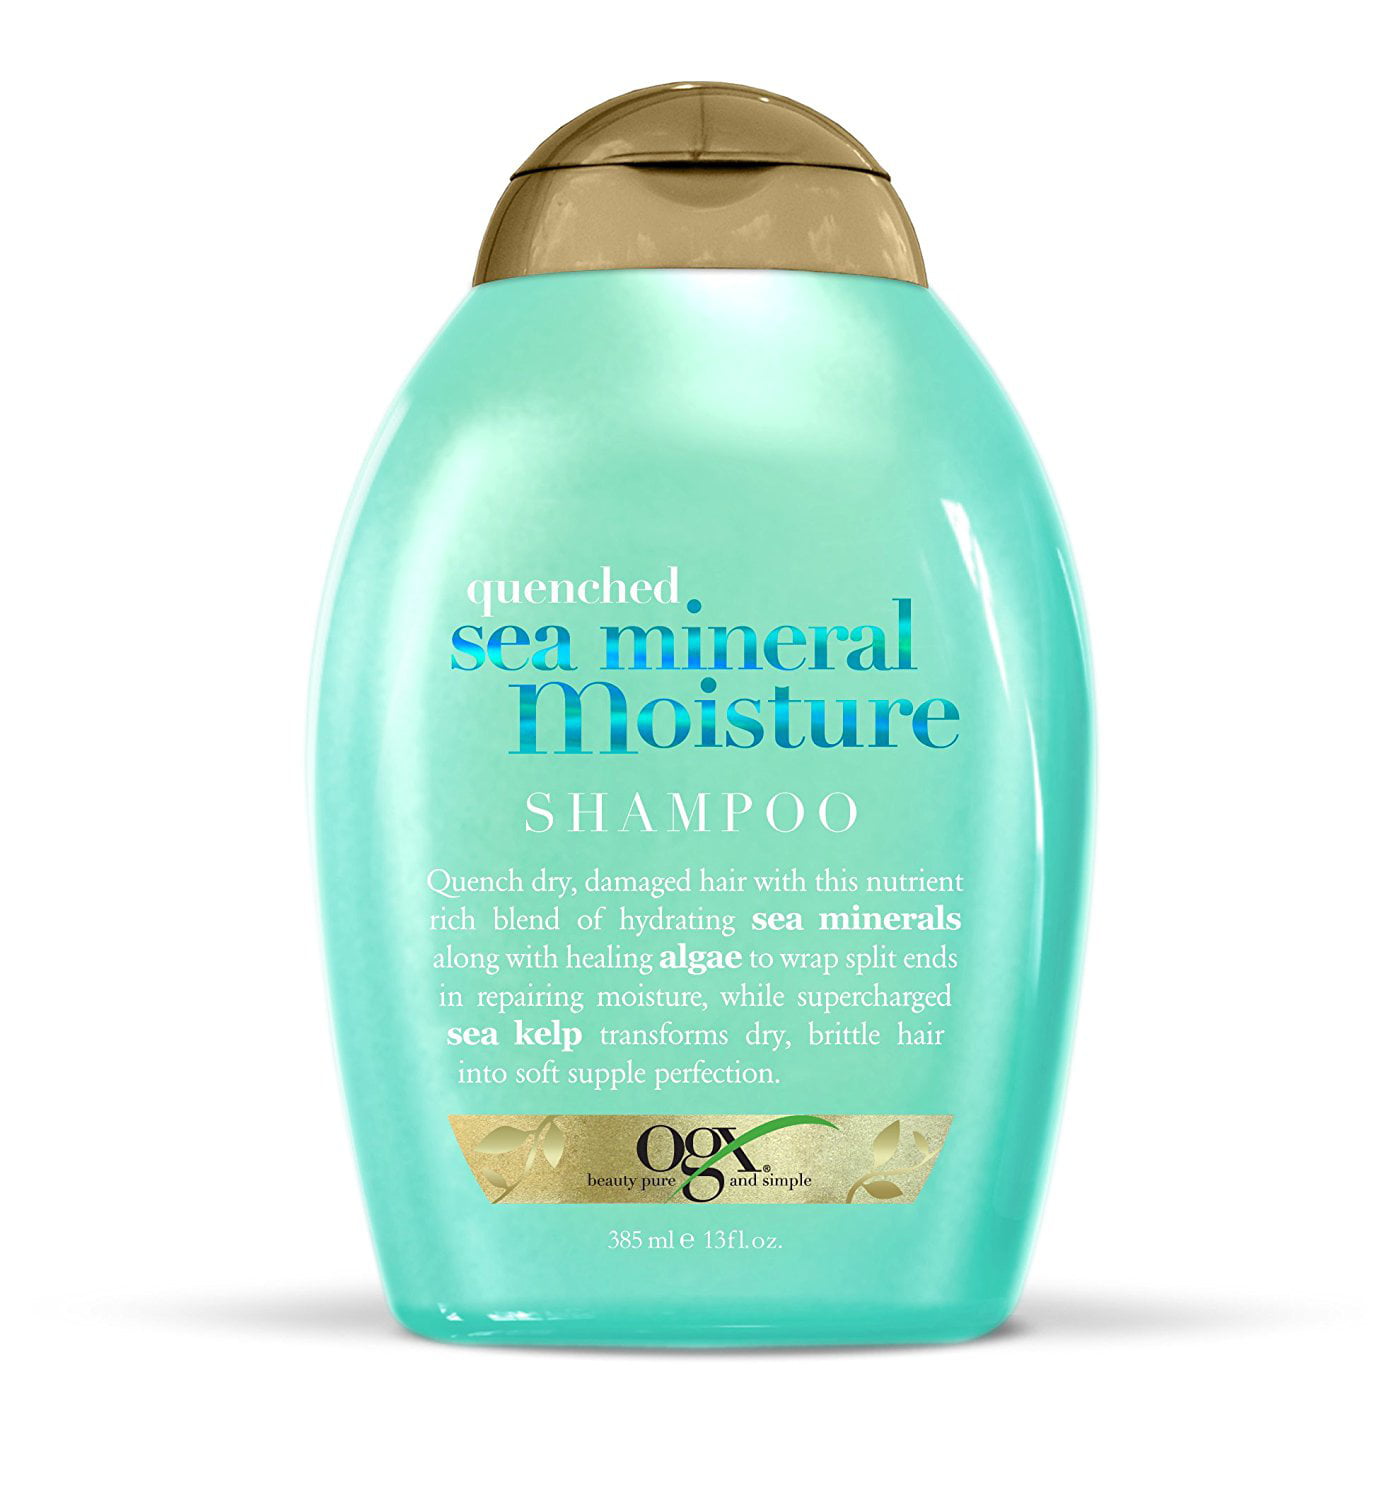 Quenched Sea Mineral Moisture Shampoo-13 oz - Walmart.com